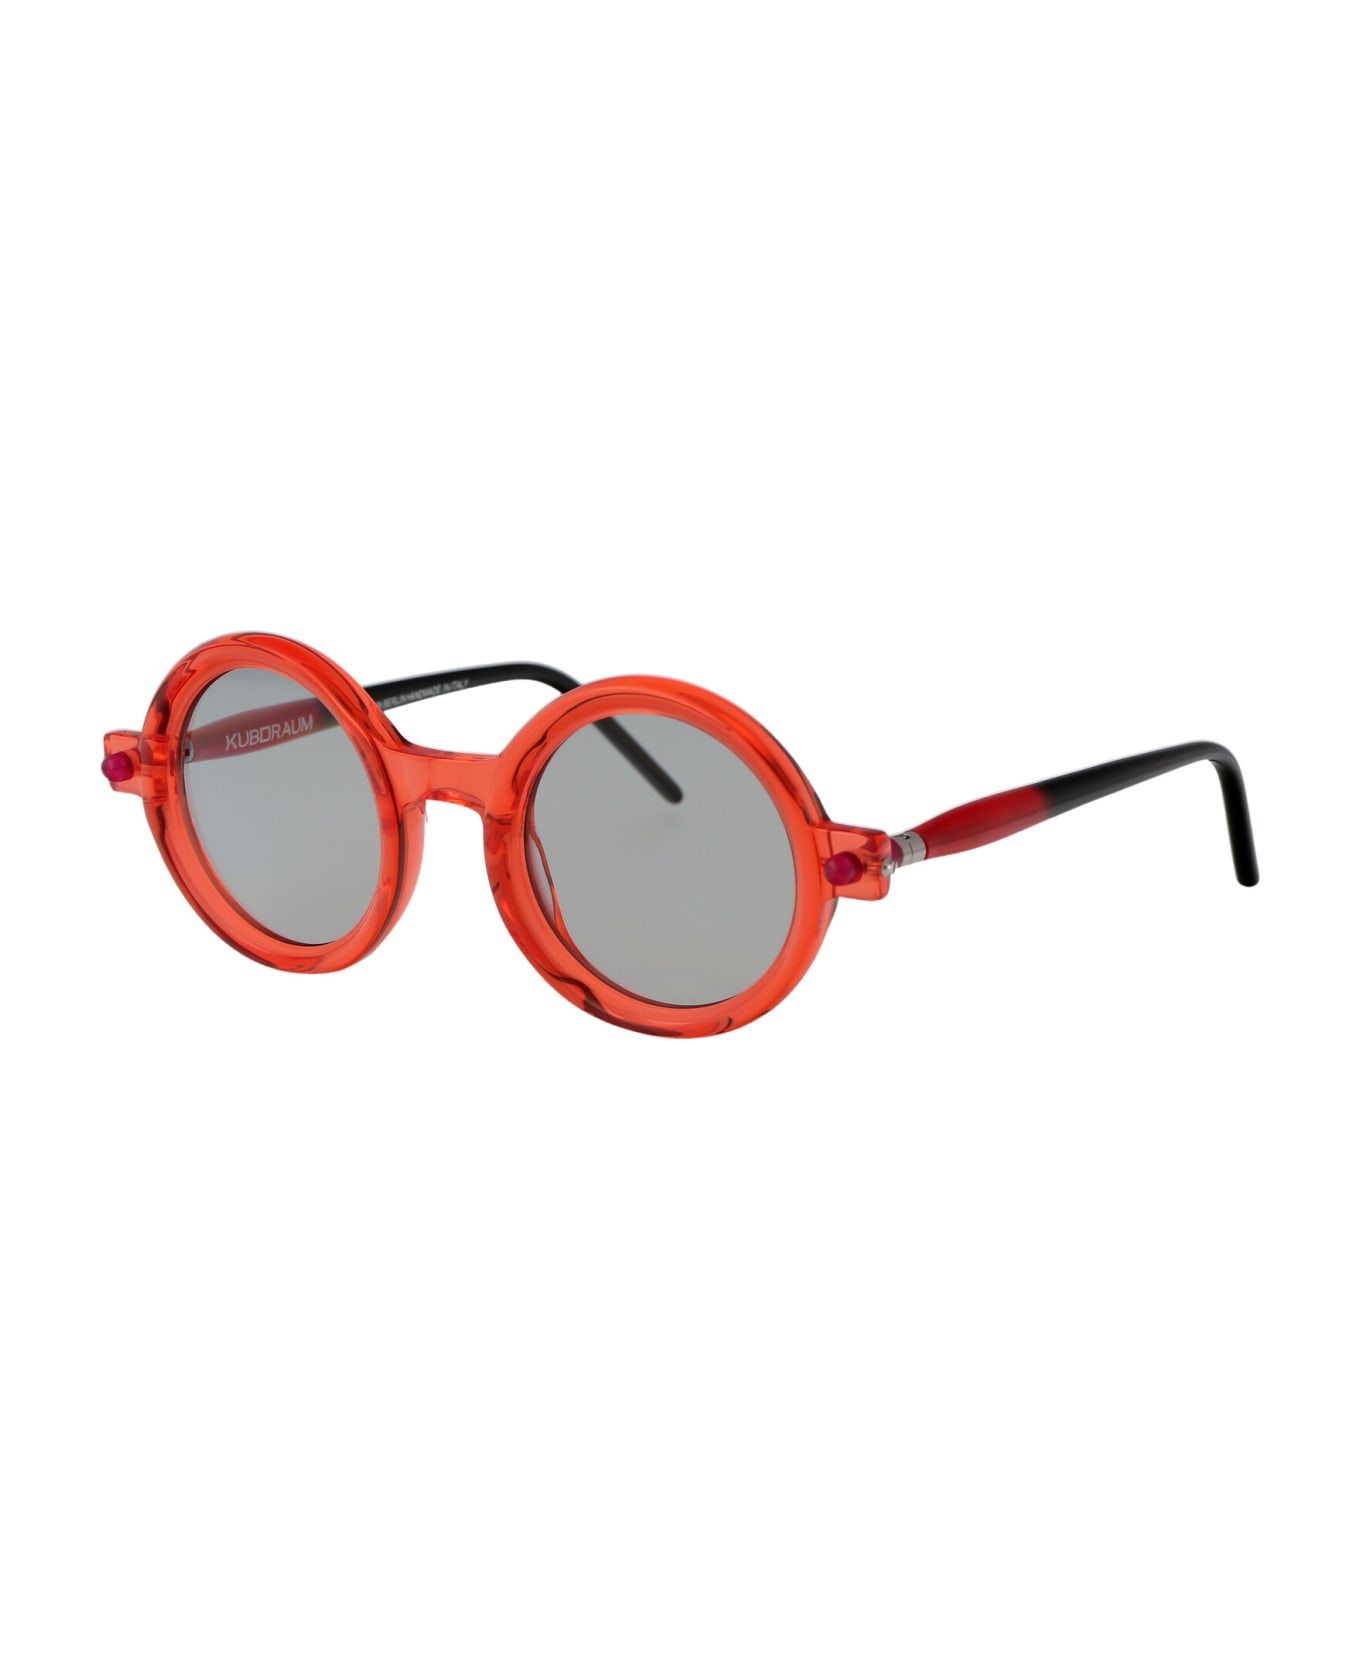 Kuboraum Maske P1 Sunglasses - ORD grey1*